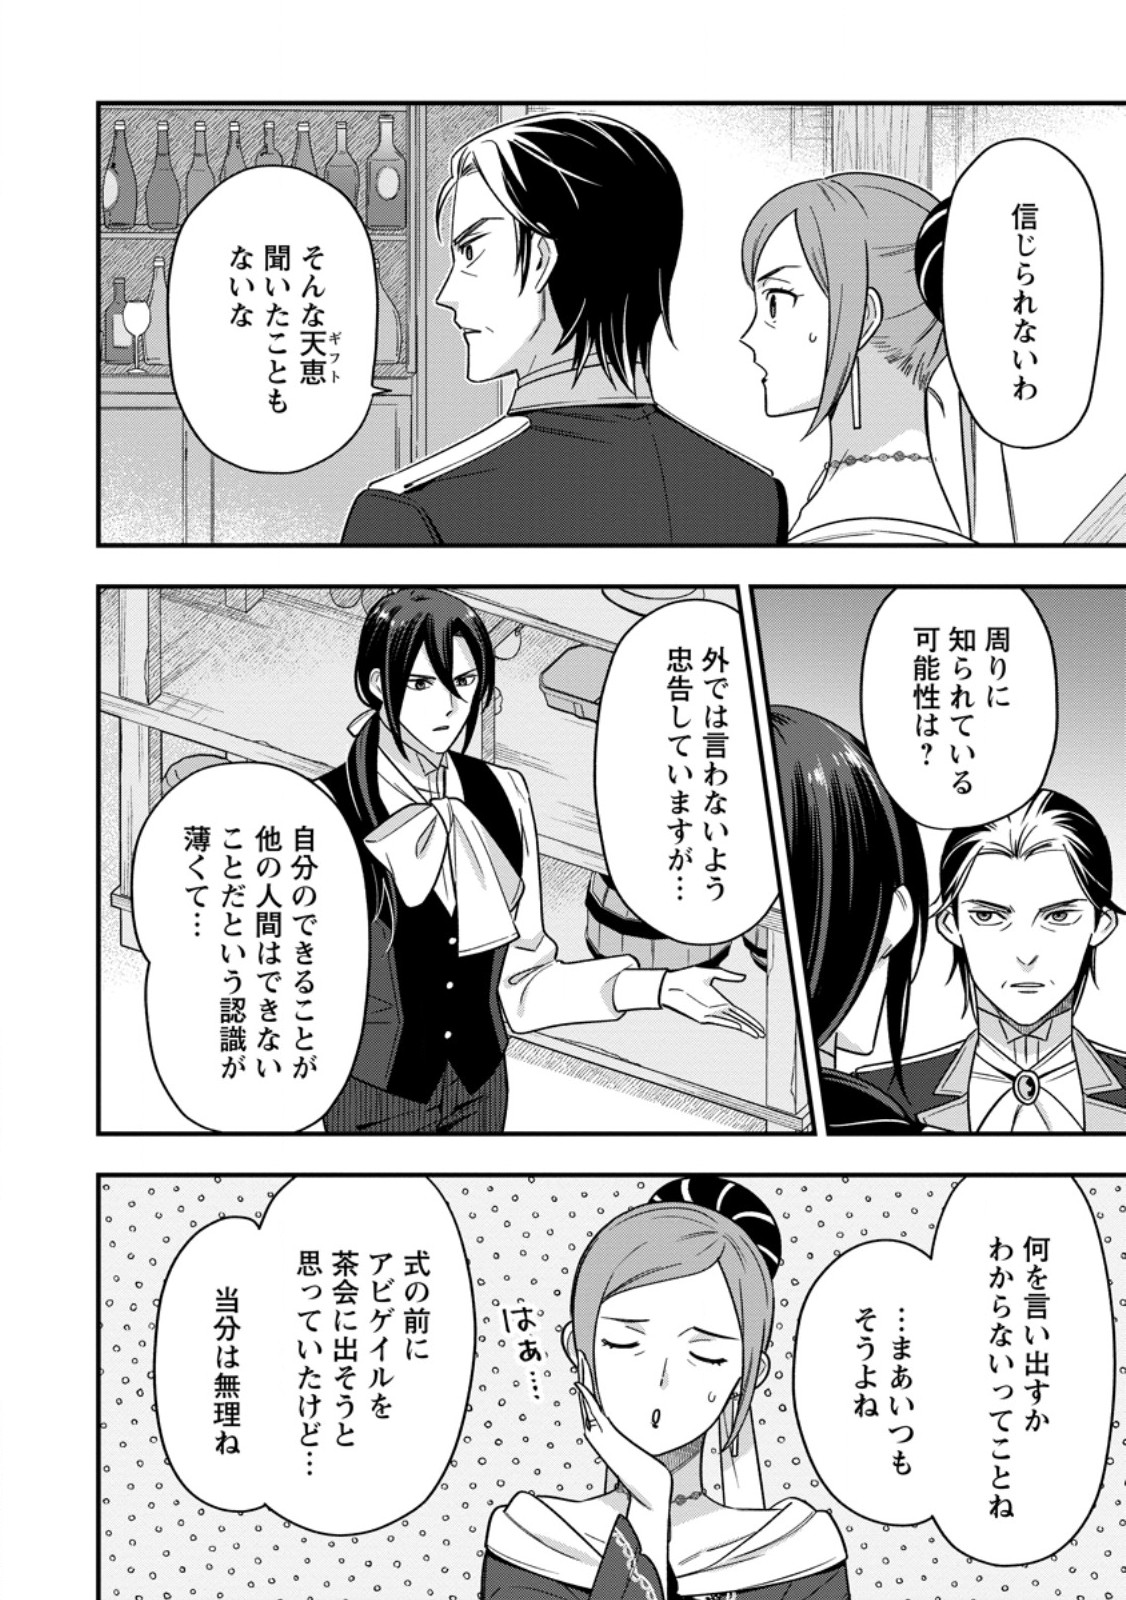 Aisanai to Iwaremashite mo - Chapter 9.3 - Page 8